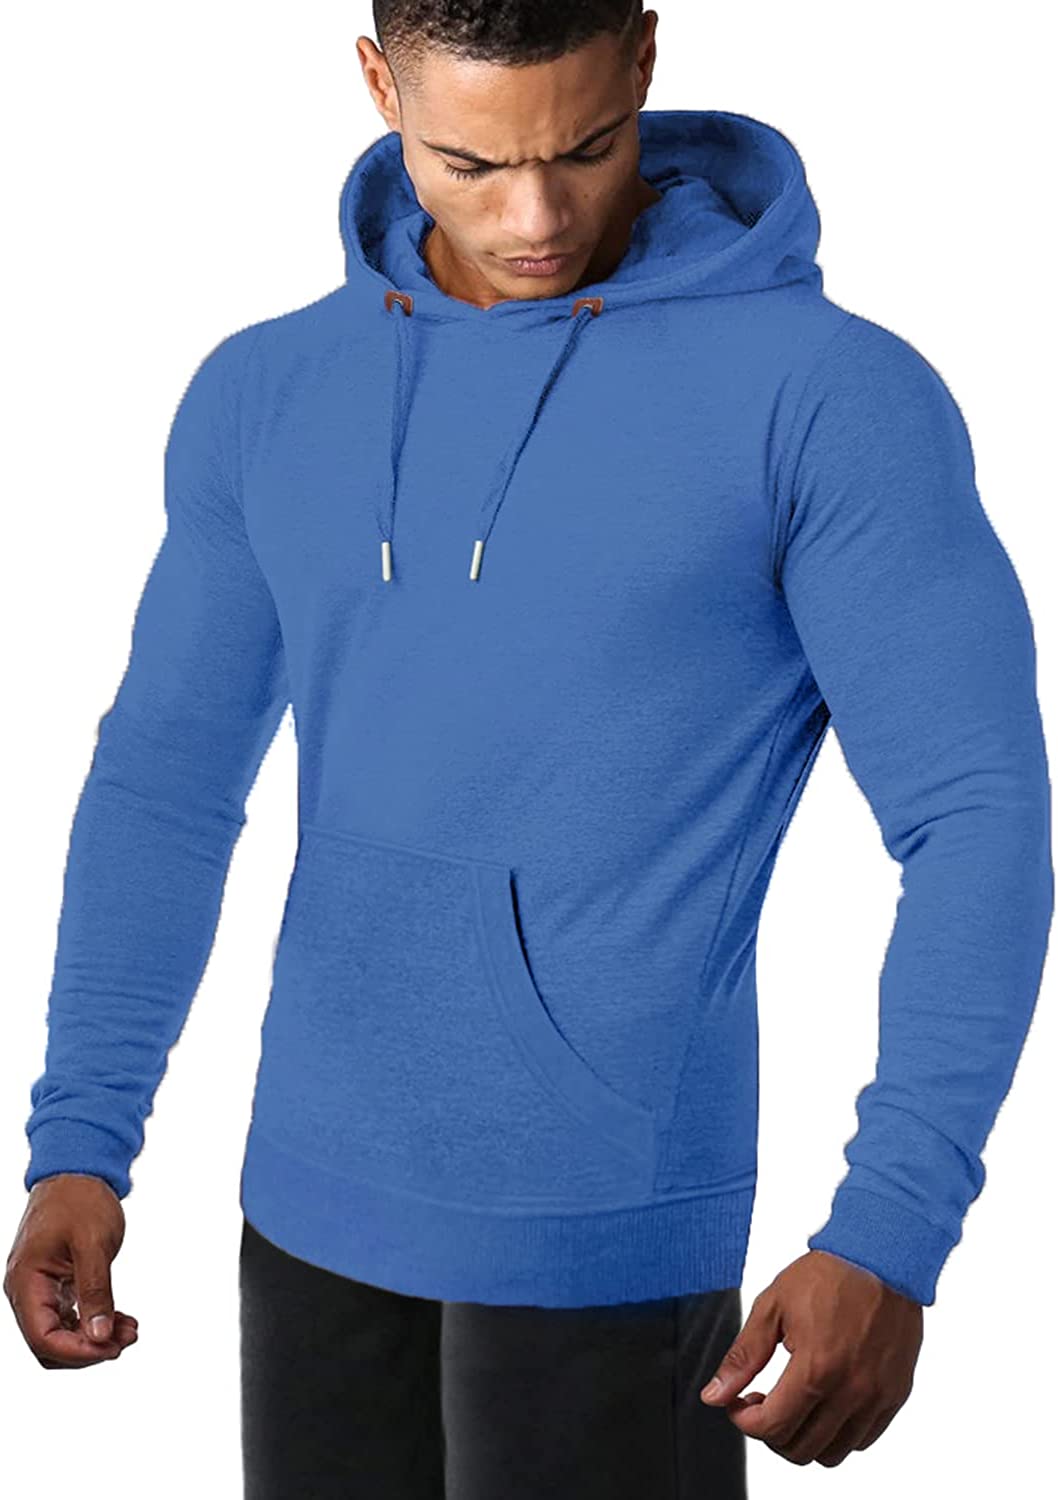 COOFANDY Men's Athletic Hoodie Long Sleeve Drawstring Sports Pullover Hooded Casual Fashion Sweatshirt with Pockets Fashion Hoodies & Sweatshirts Coofandy's Blue Small 